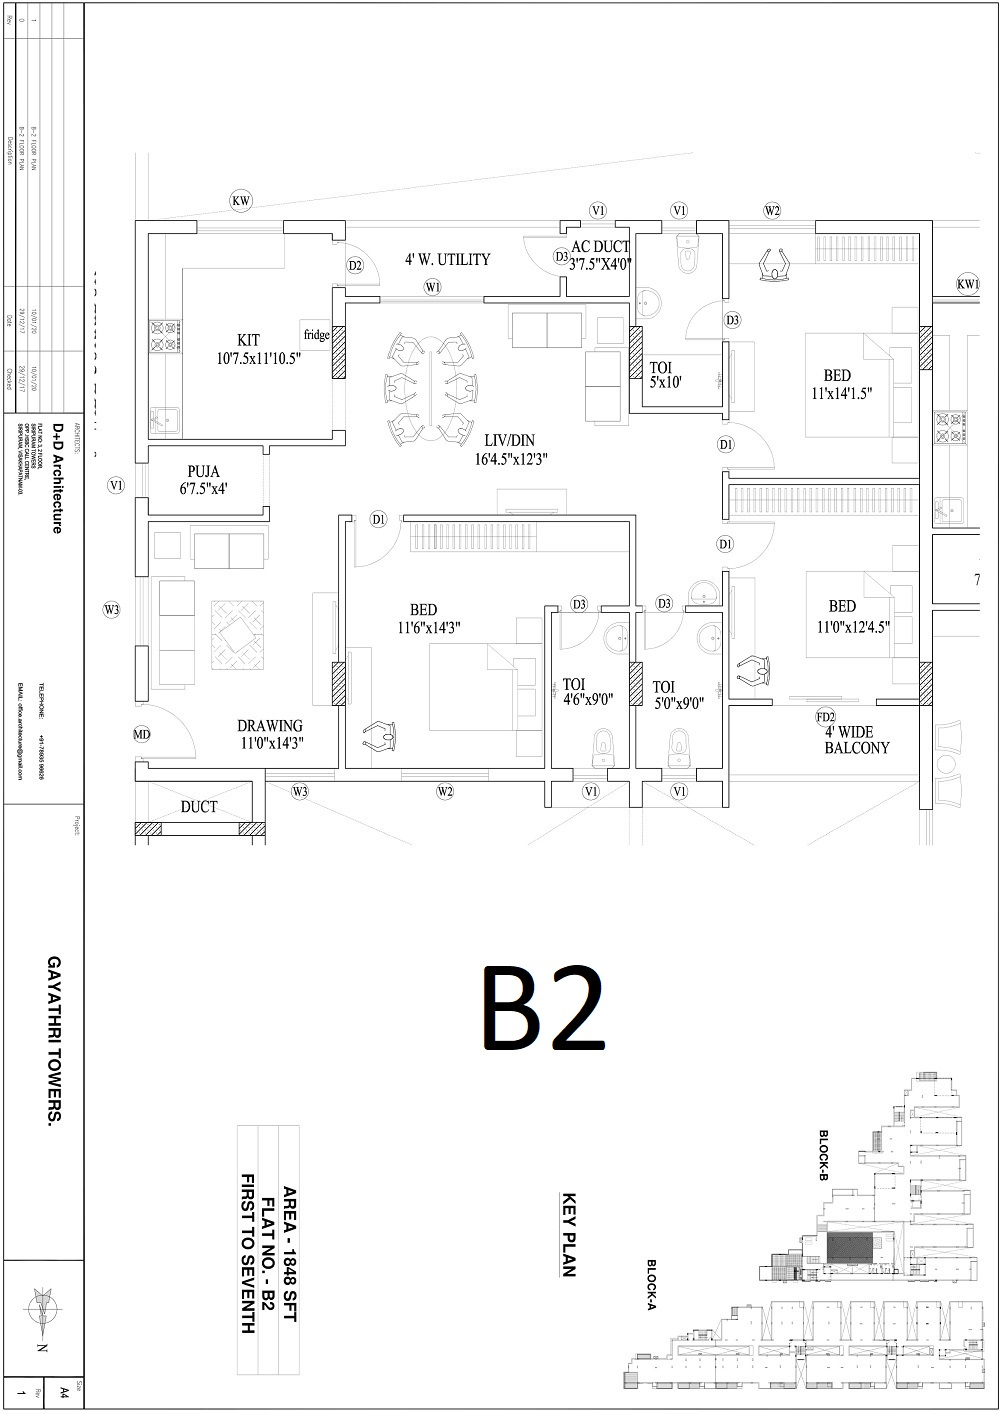 B2 - Tipcal Floor Plan